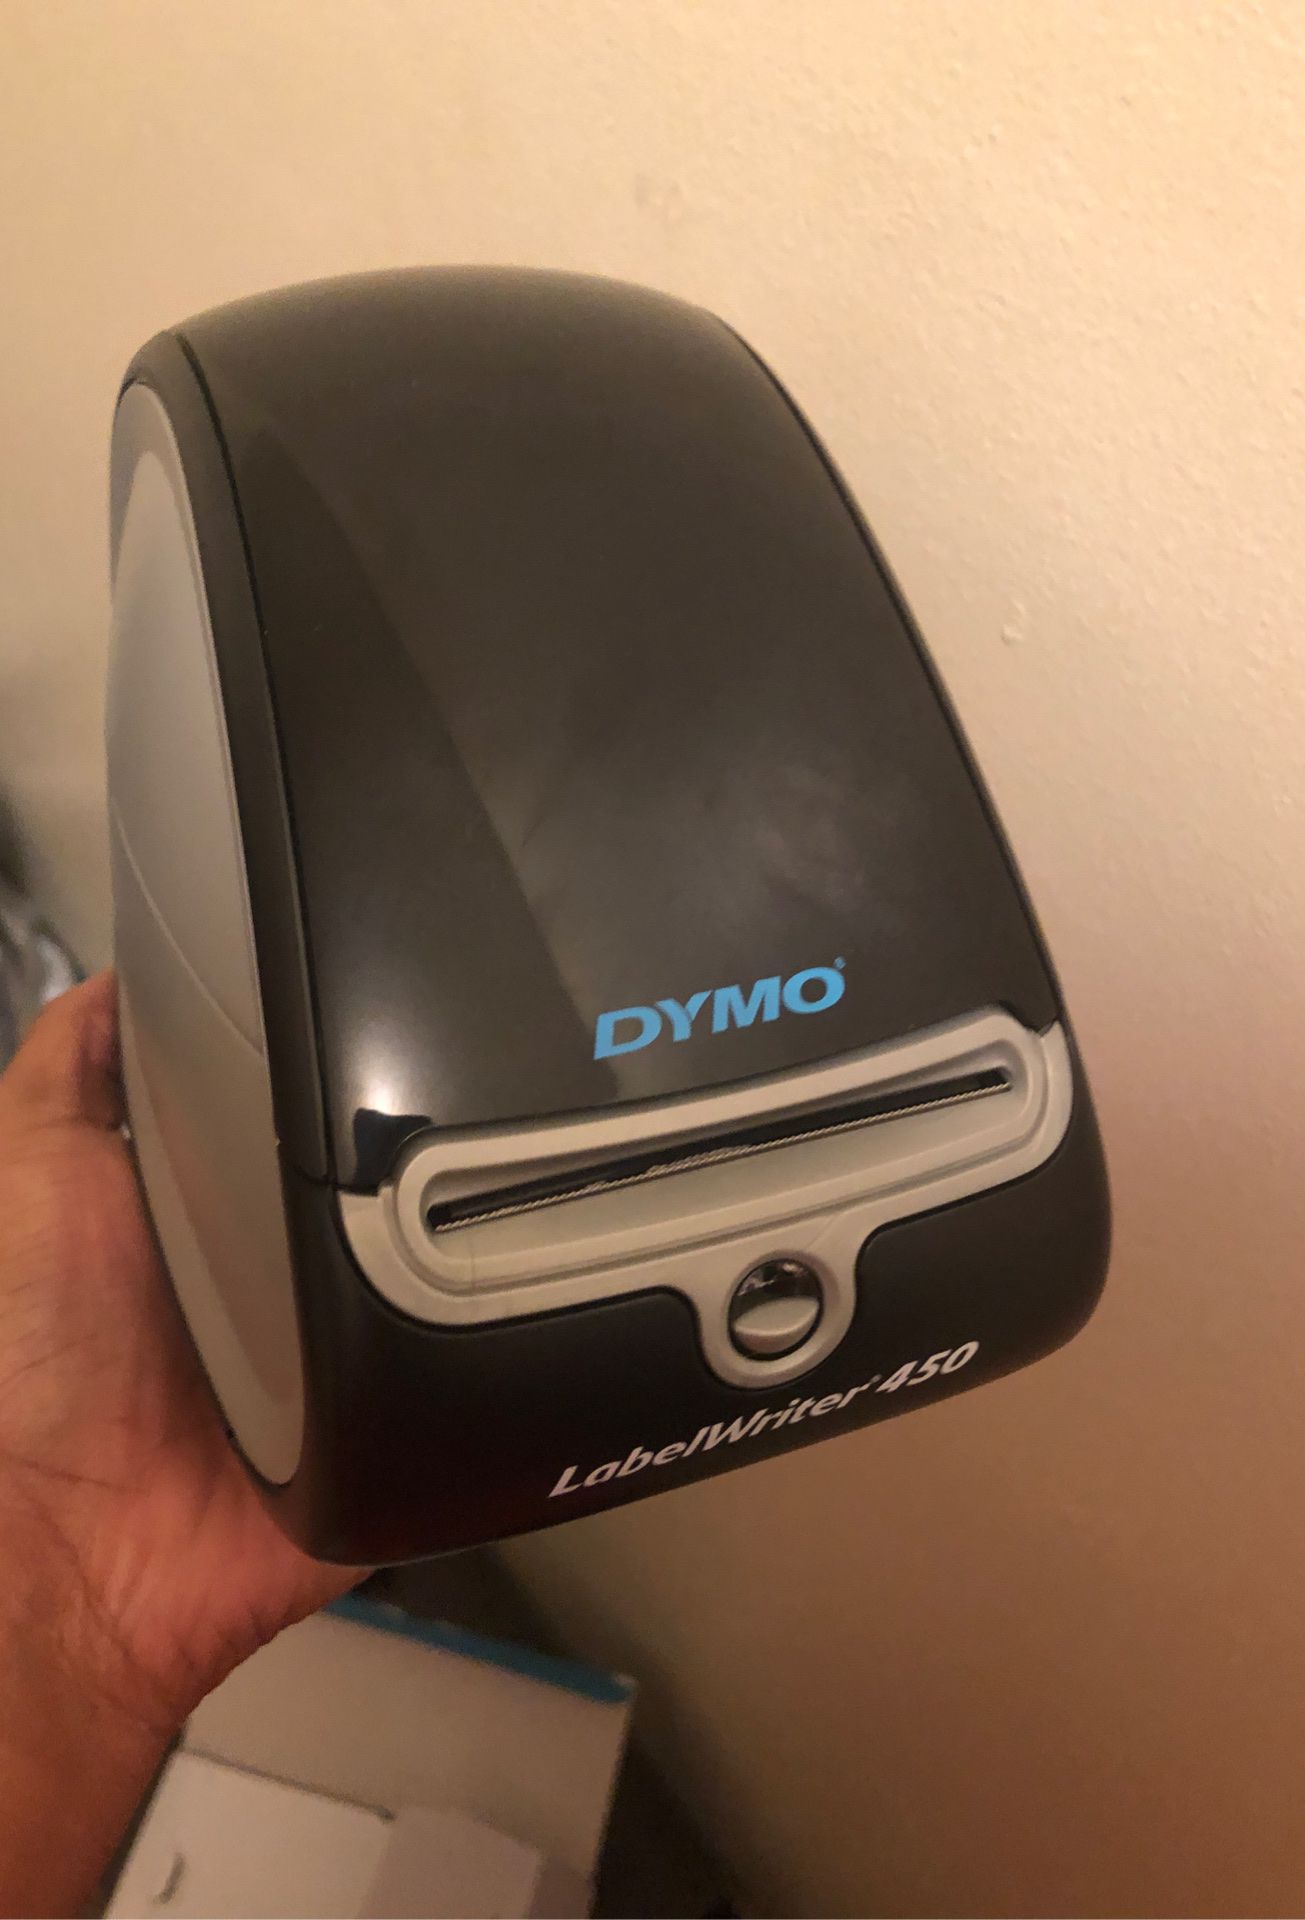 DYMO label printer